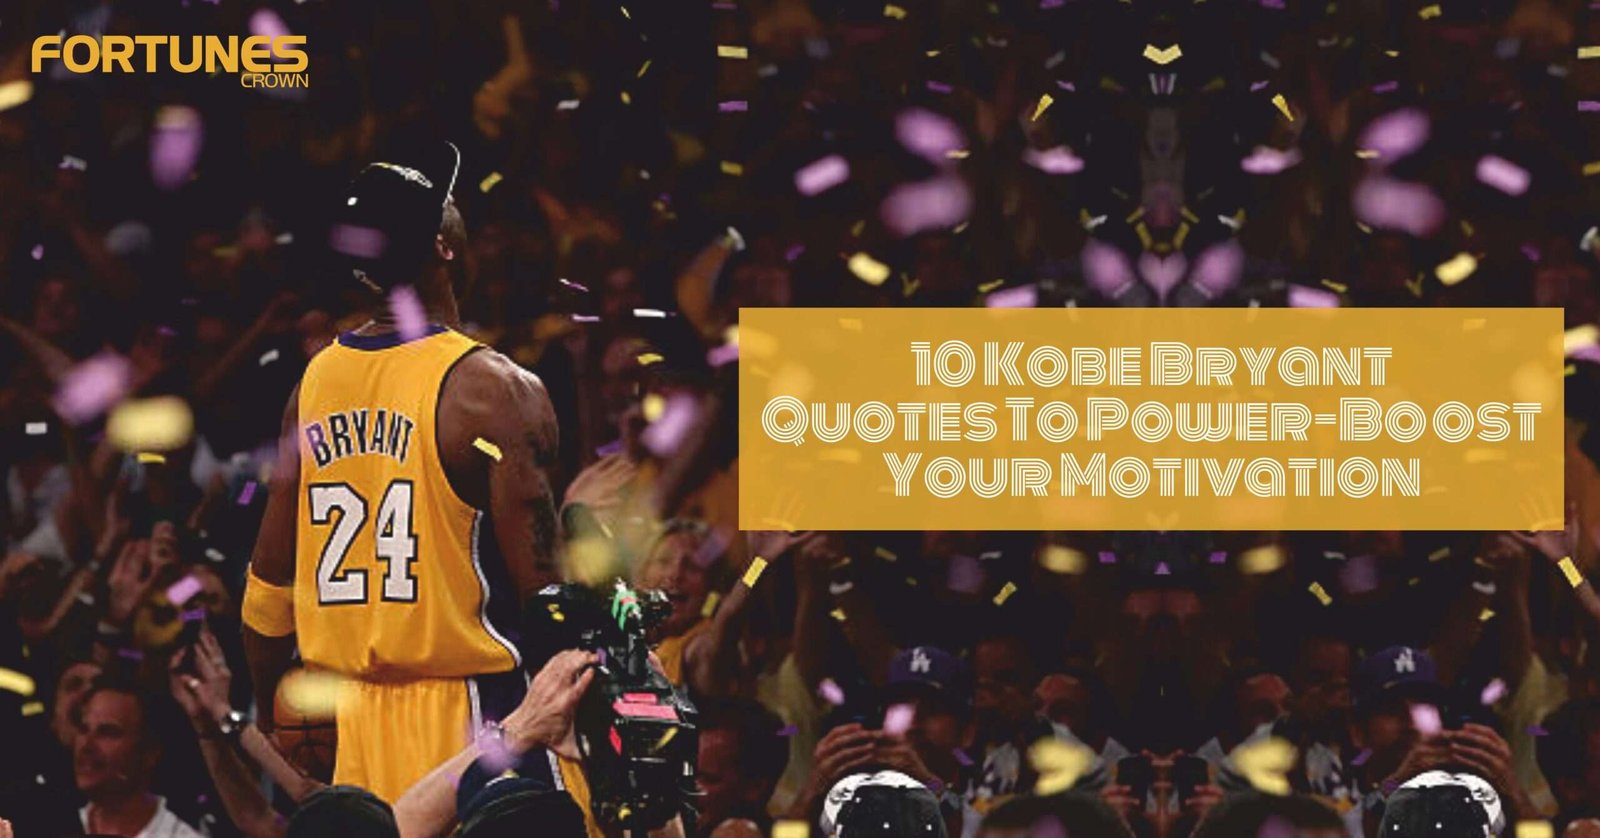 Kobe Bryant, Kobe Bryant Quotes, and Kobe Bryant Motivational Quotes